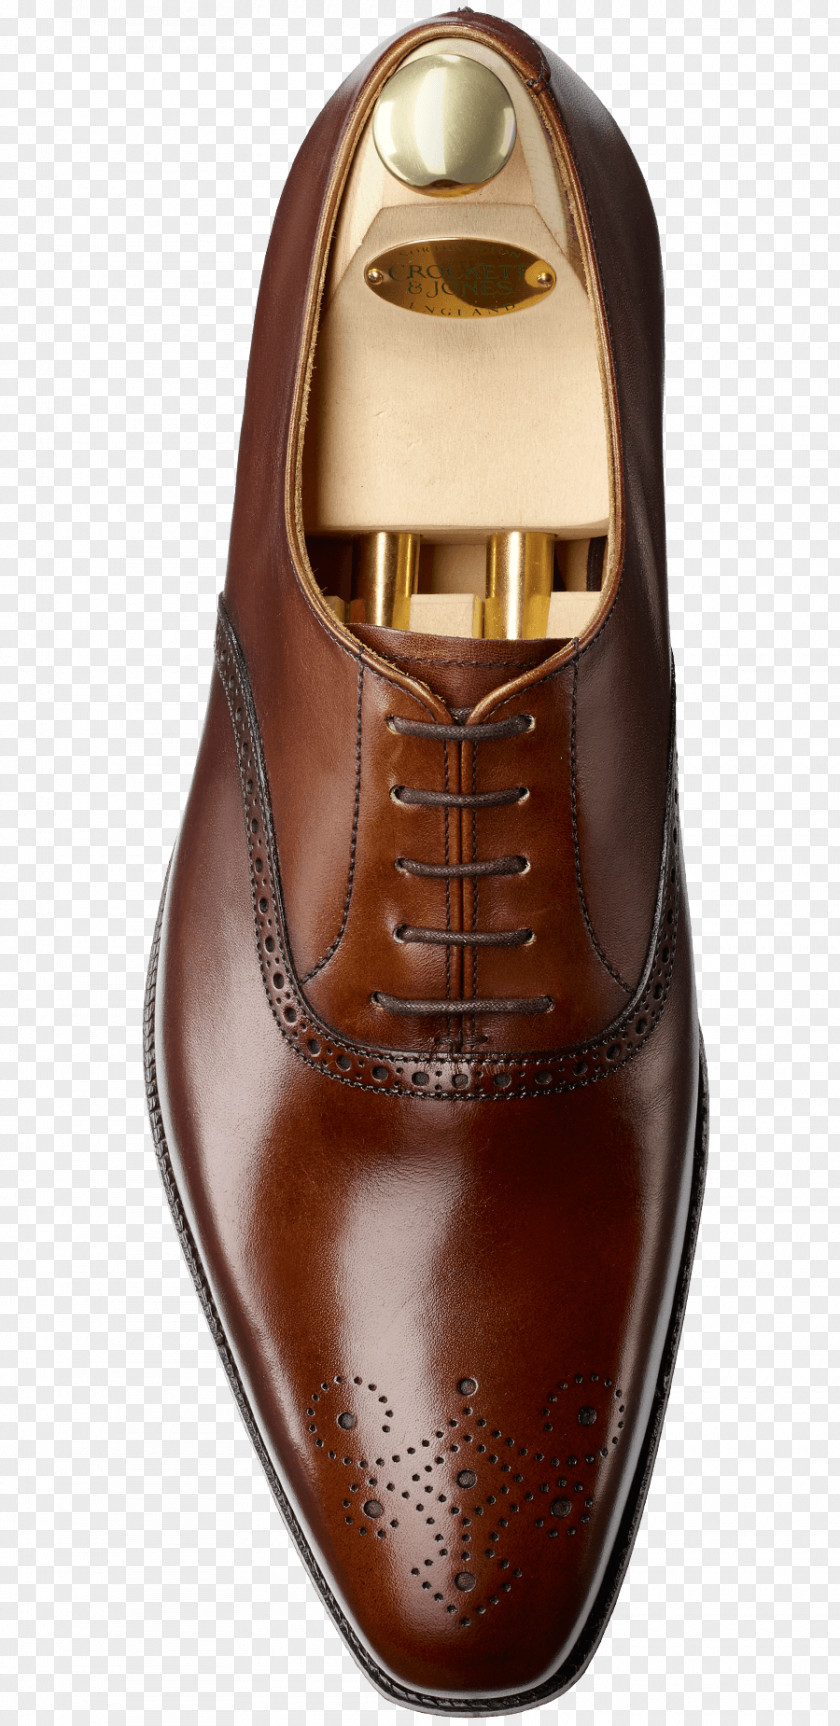 Suit Brogue Shoe Leather Crockett & Jones Oxford PNG